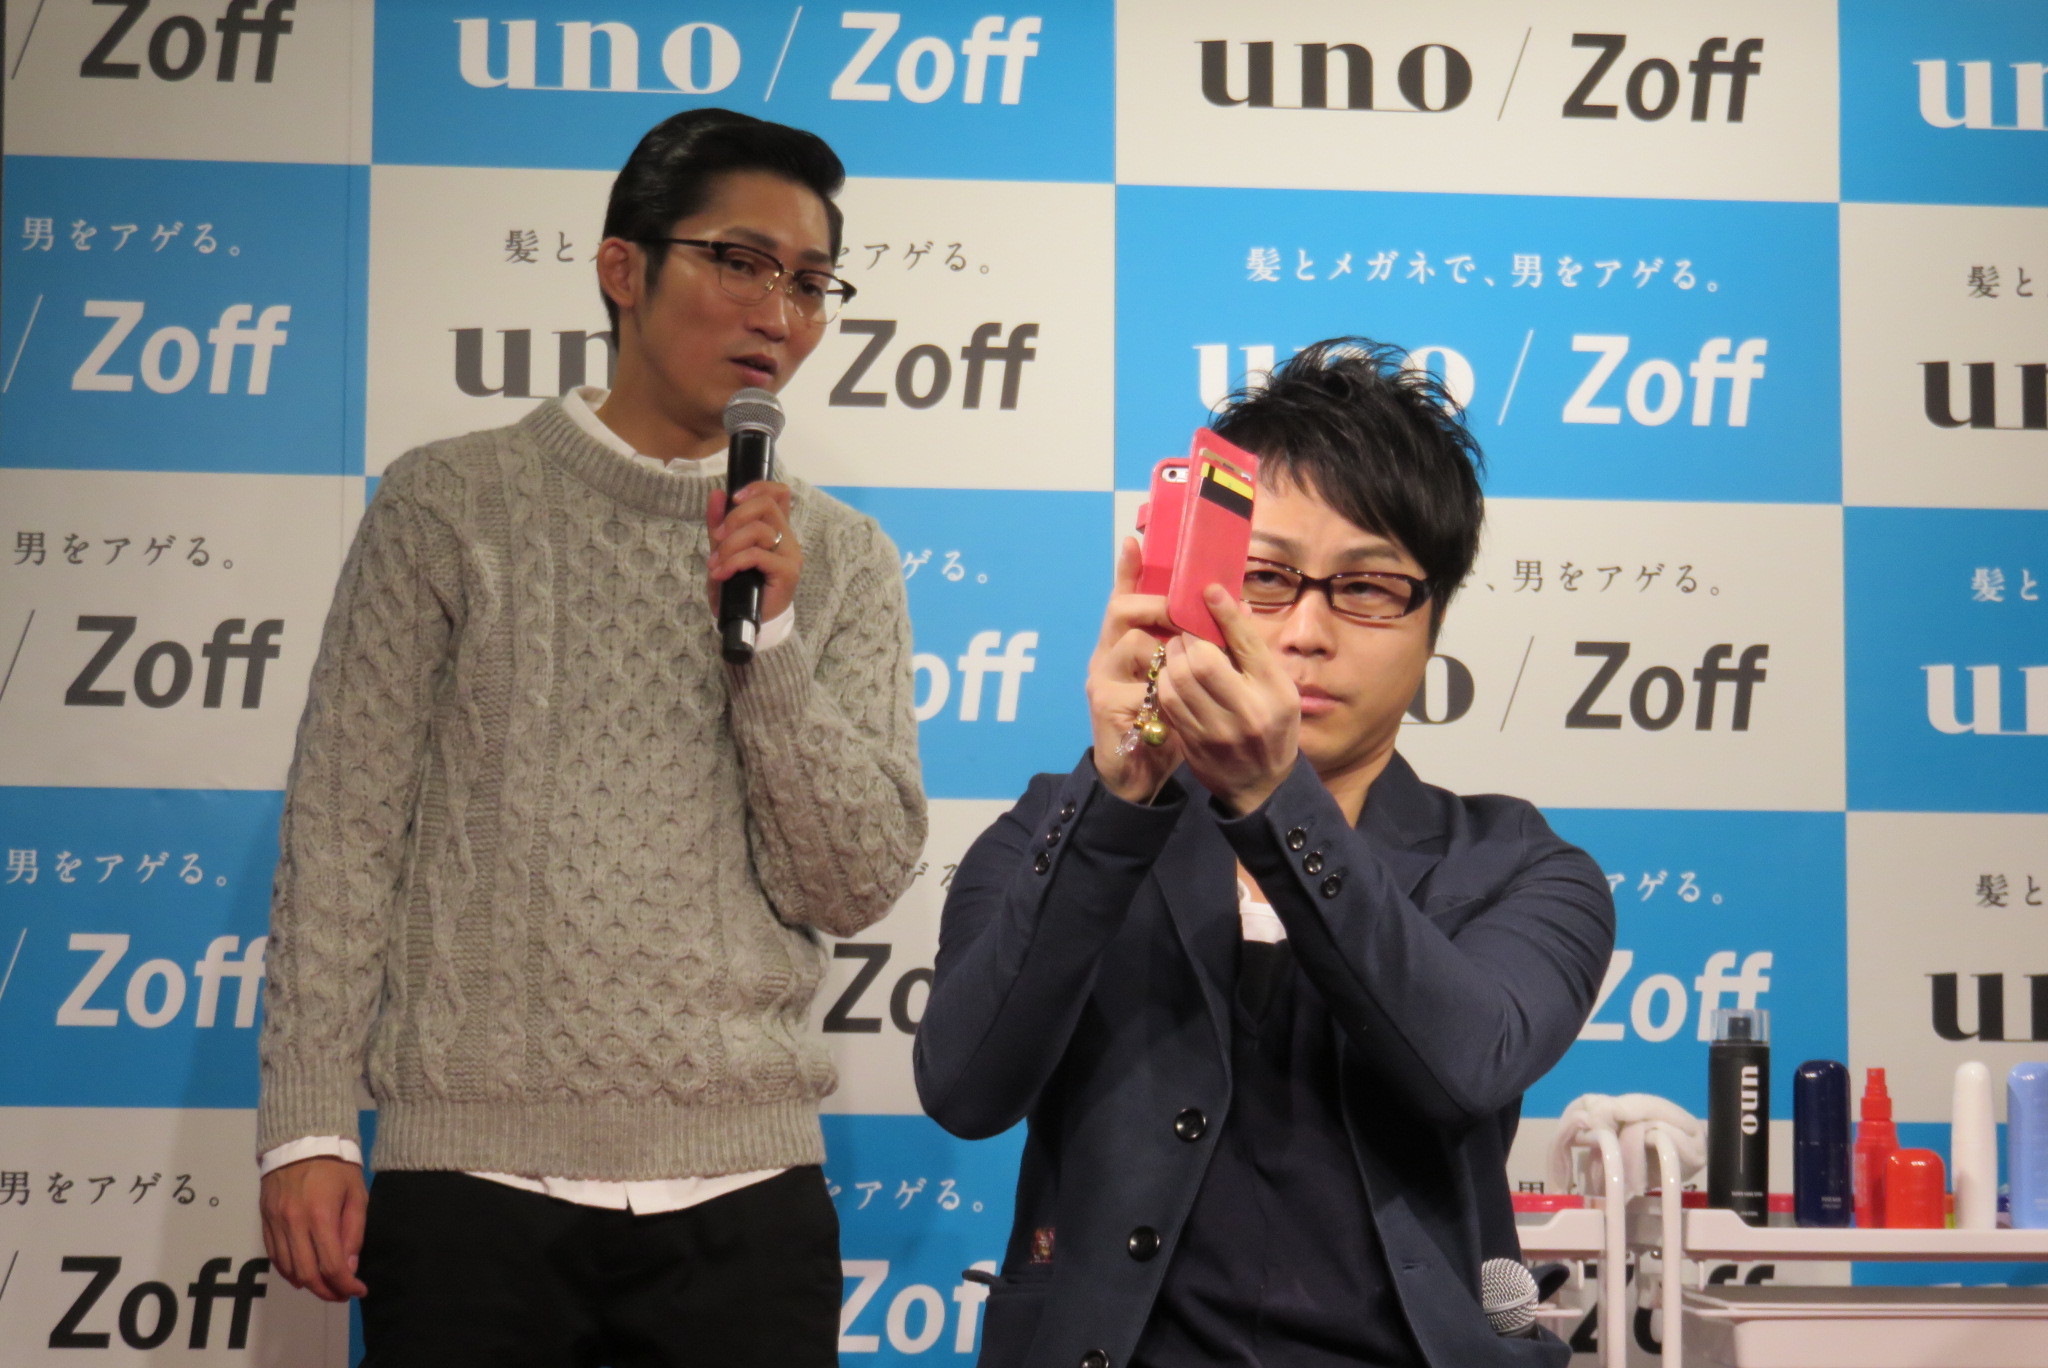 http://news.yoshimoto.co.jp/photos/uncategorized/2014/11/13/IMG_7656.jpg